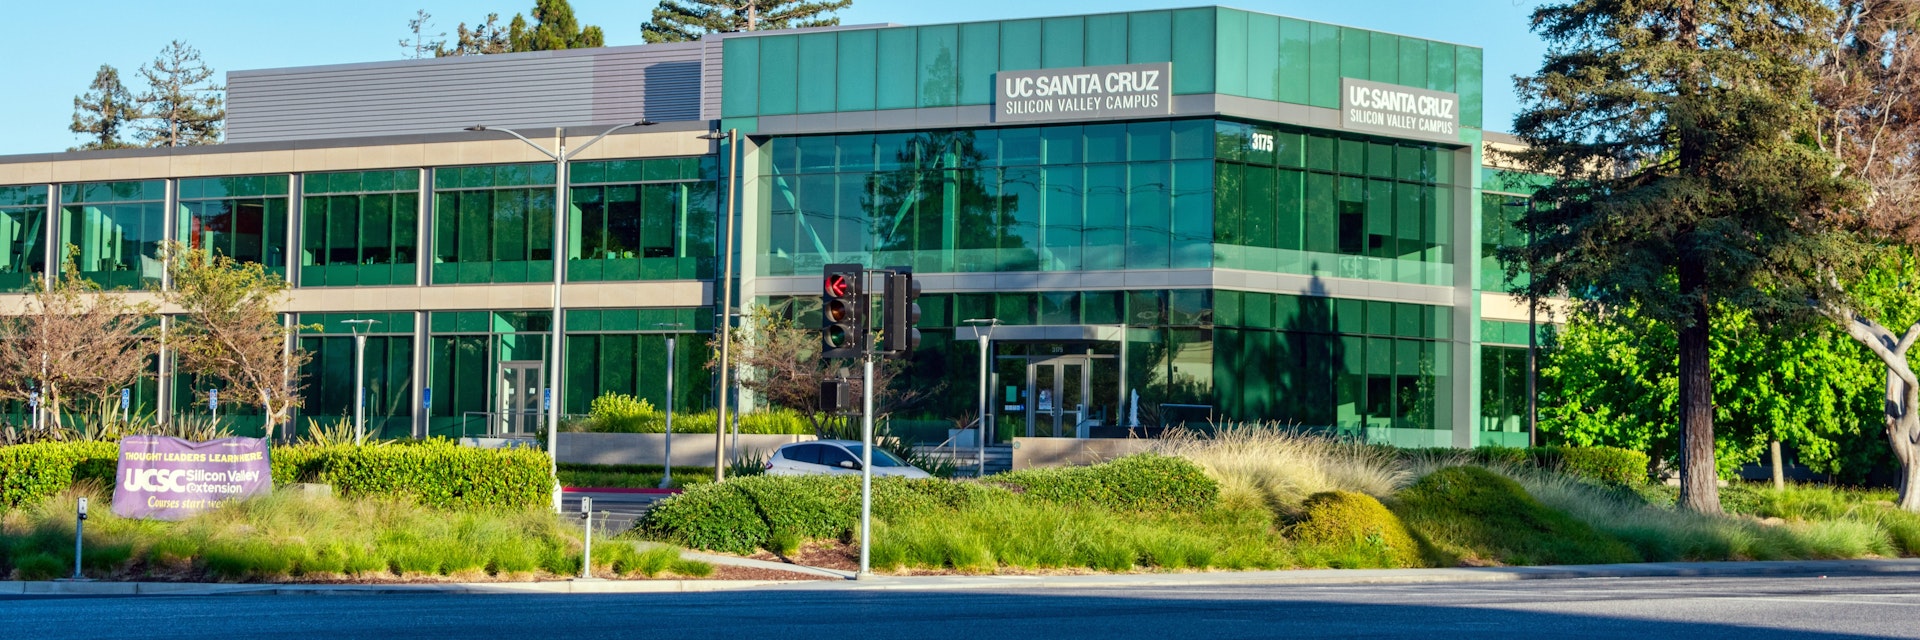 UC Santa Cruz Silicon Valley Campus - Santa Clara, California, USA - June 29, 2019; Shutterstock ID 1438419443; your: Bridget Brown; gl: 65050; netsuite: Online Editorial; full: POI Image Update